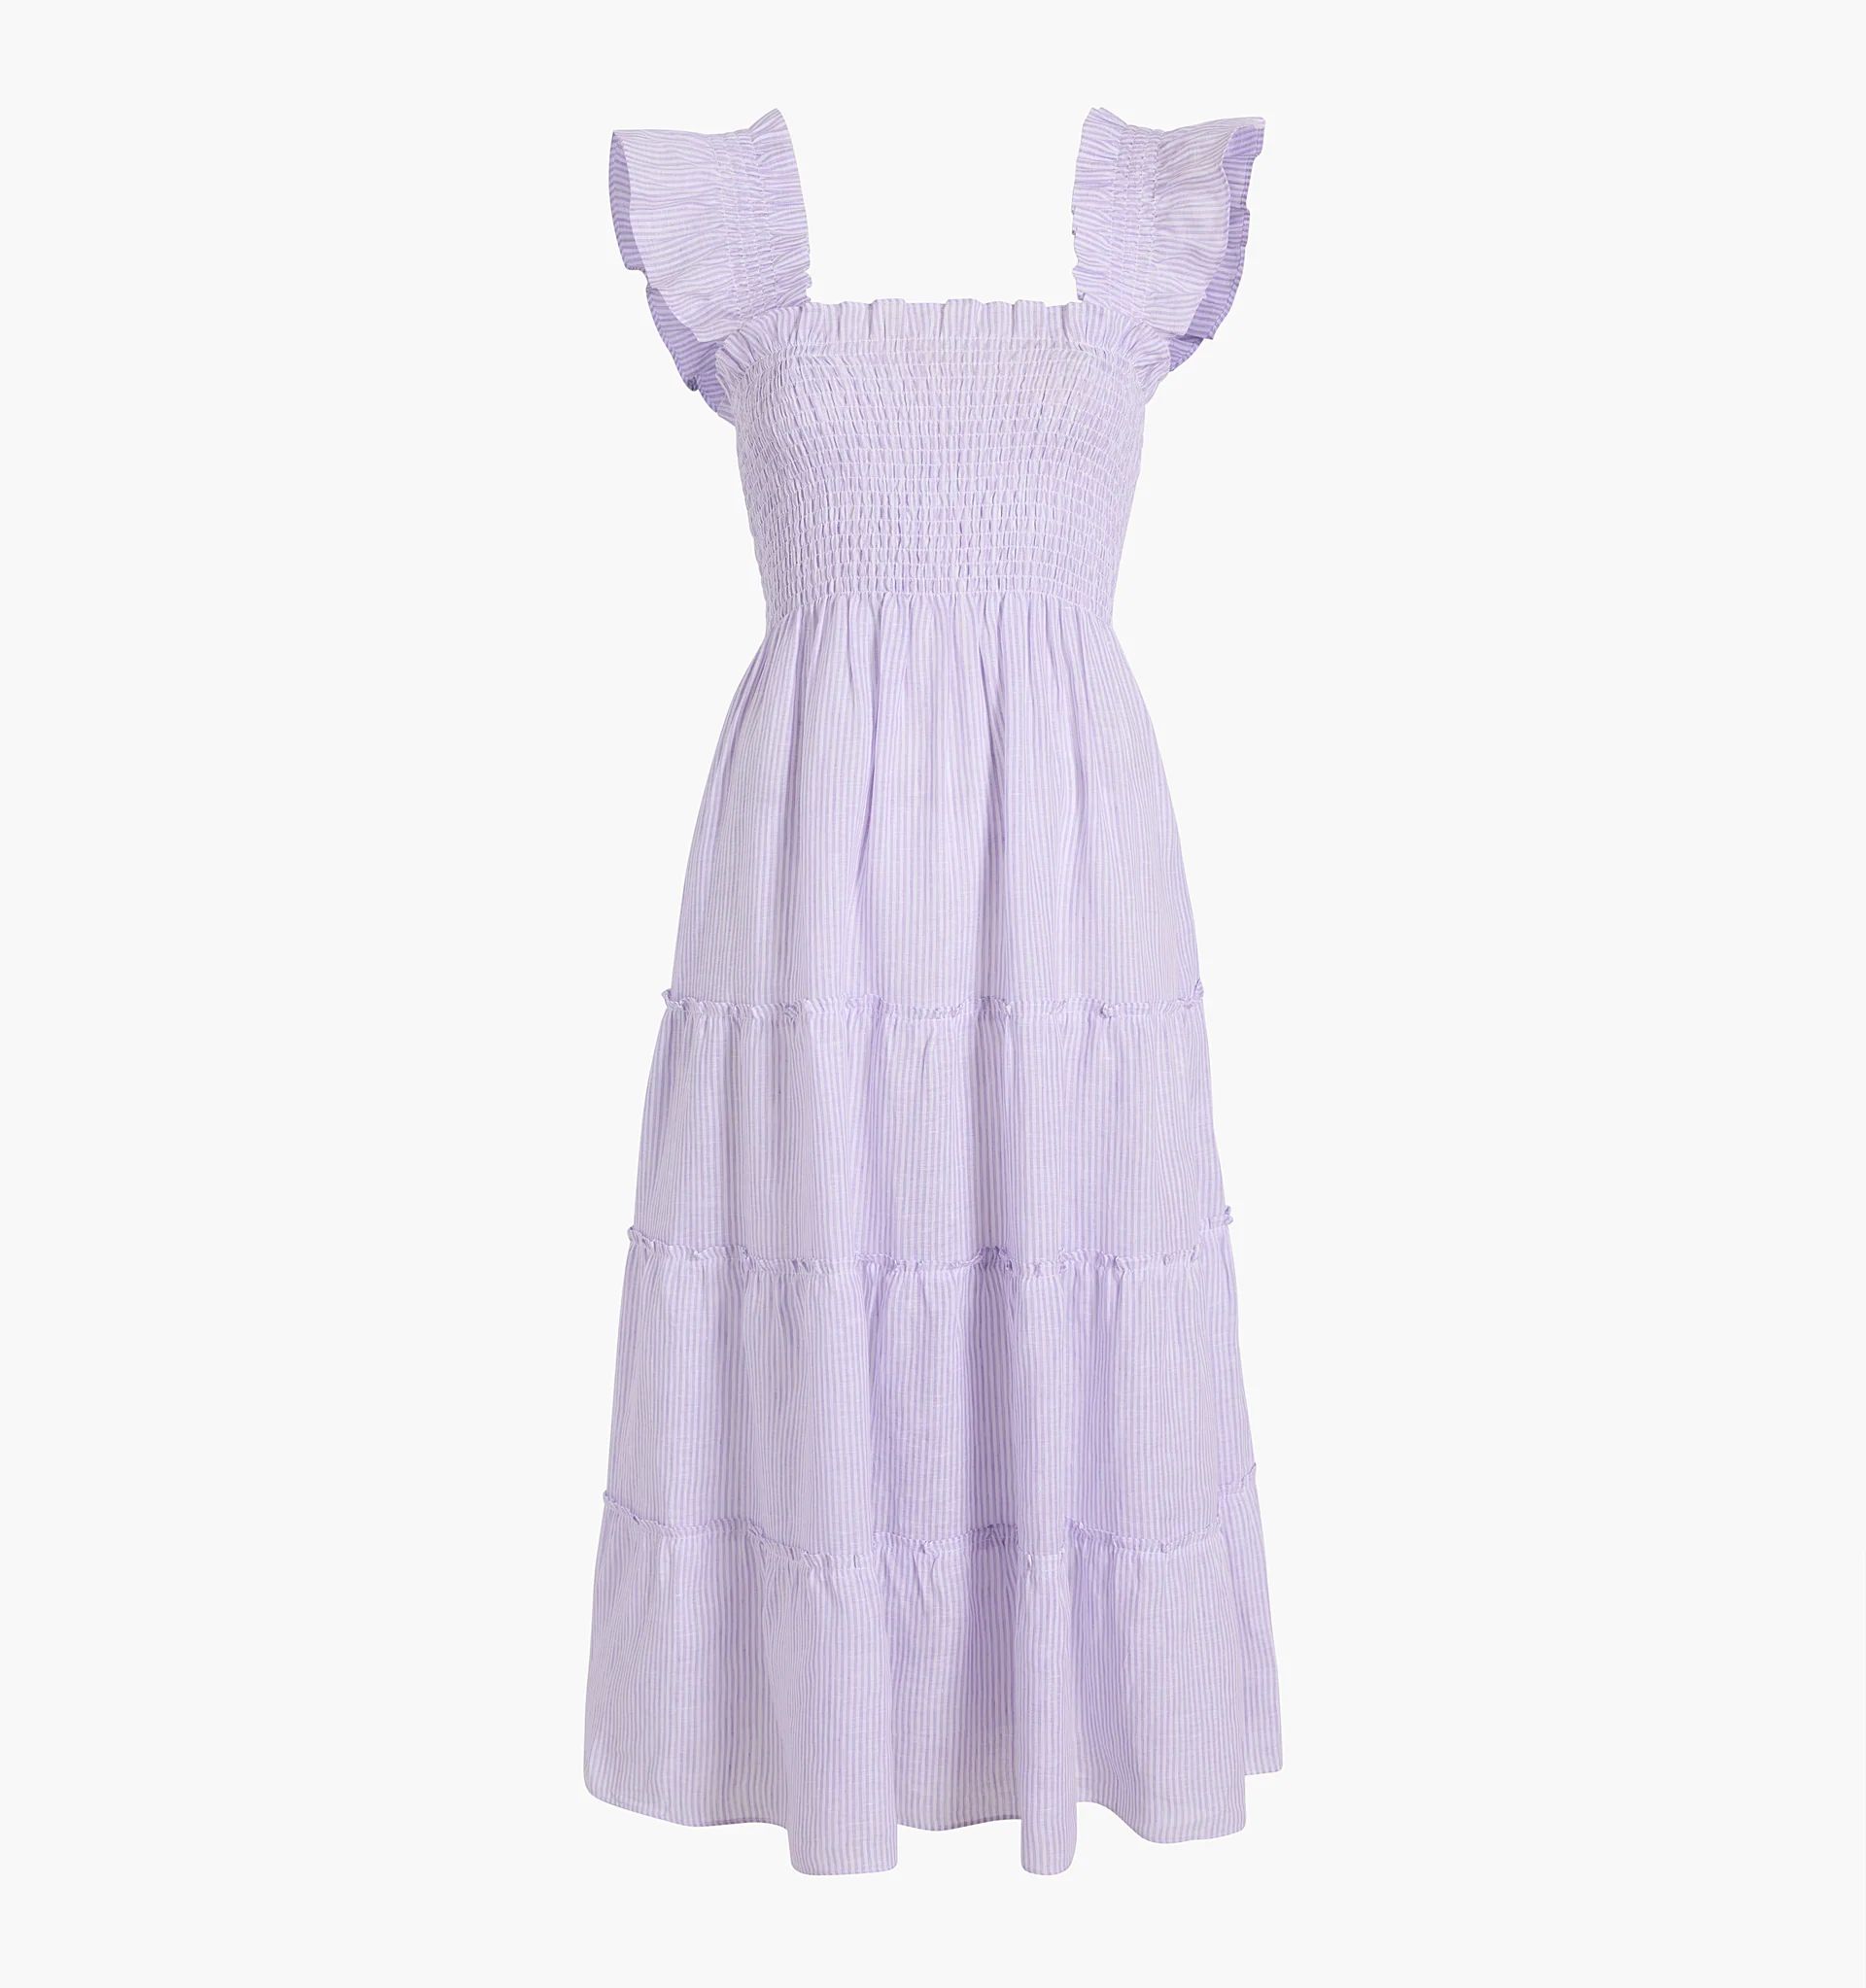 The Ellie Nap Dress - Lilac Stripe Linen | Hill House Home